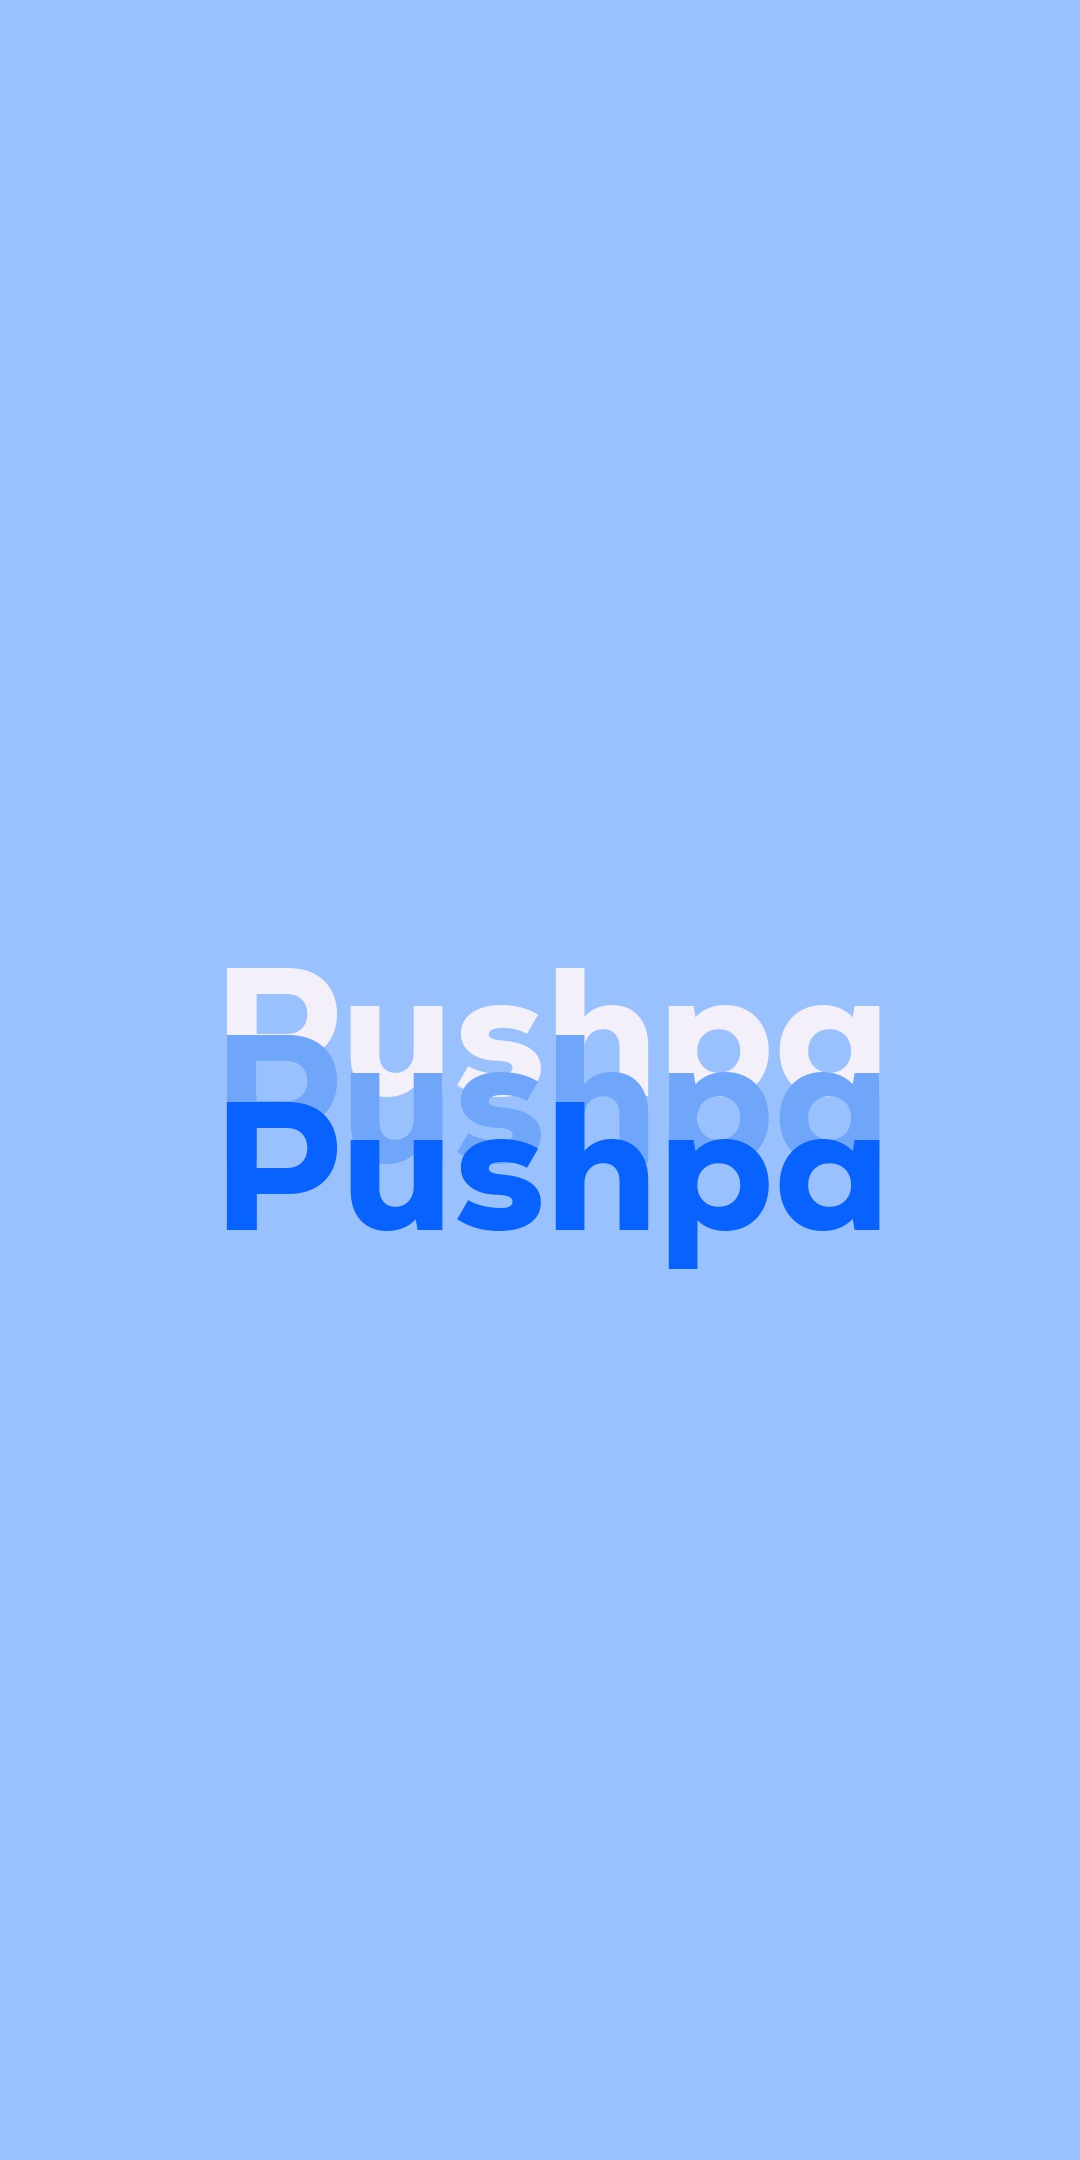 Pushpa Exports - Proprietor - Self-employed | LinkedIn